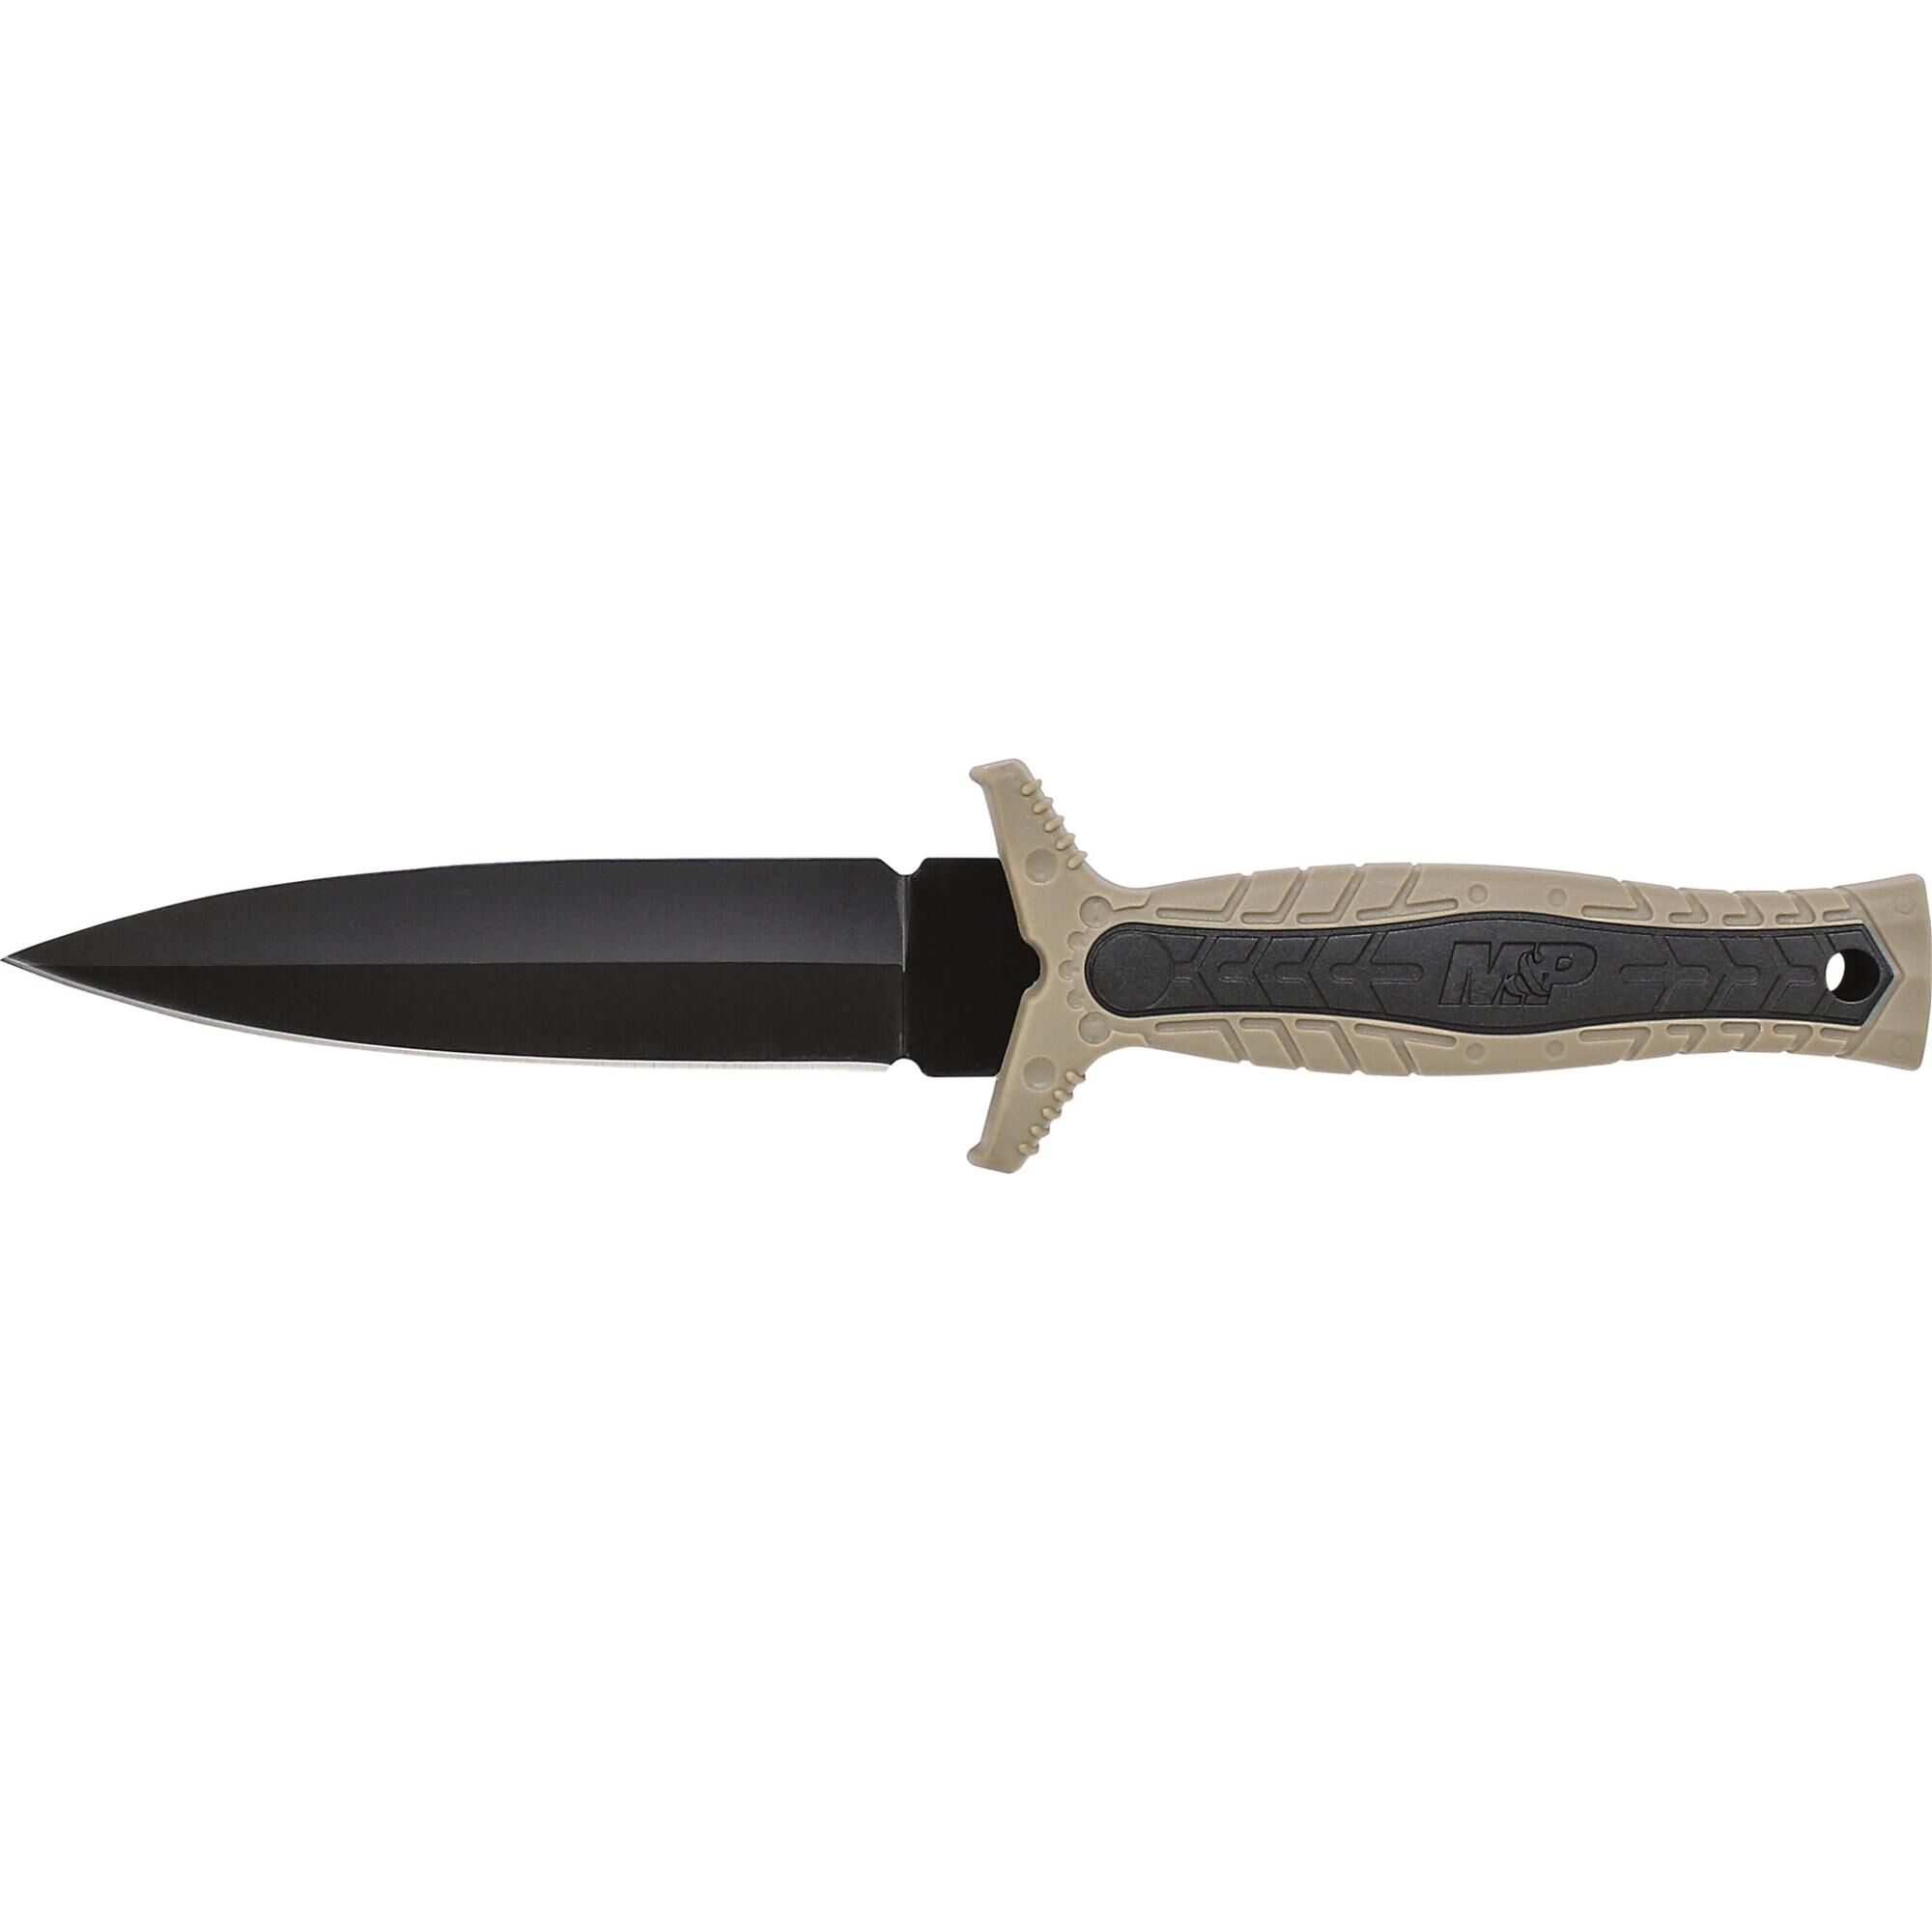 Wüsthof Classic 9-piece knife set, 1090170904  Advantageously shopping at